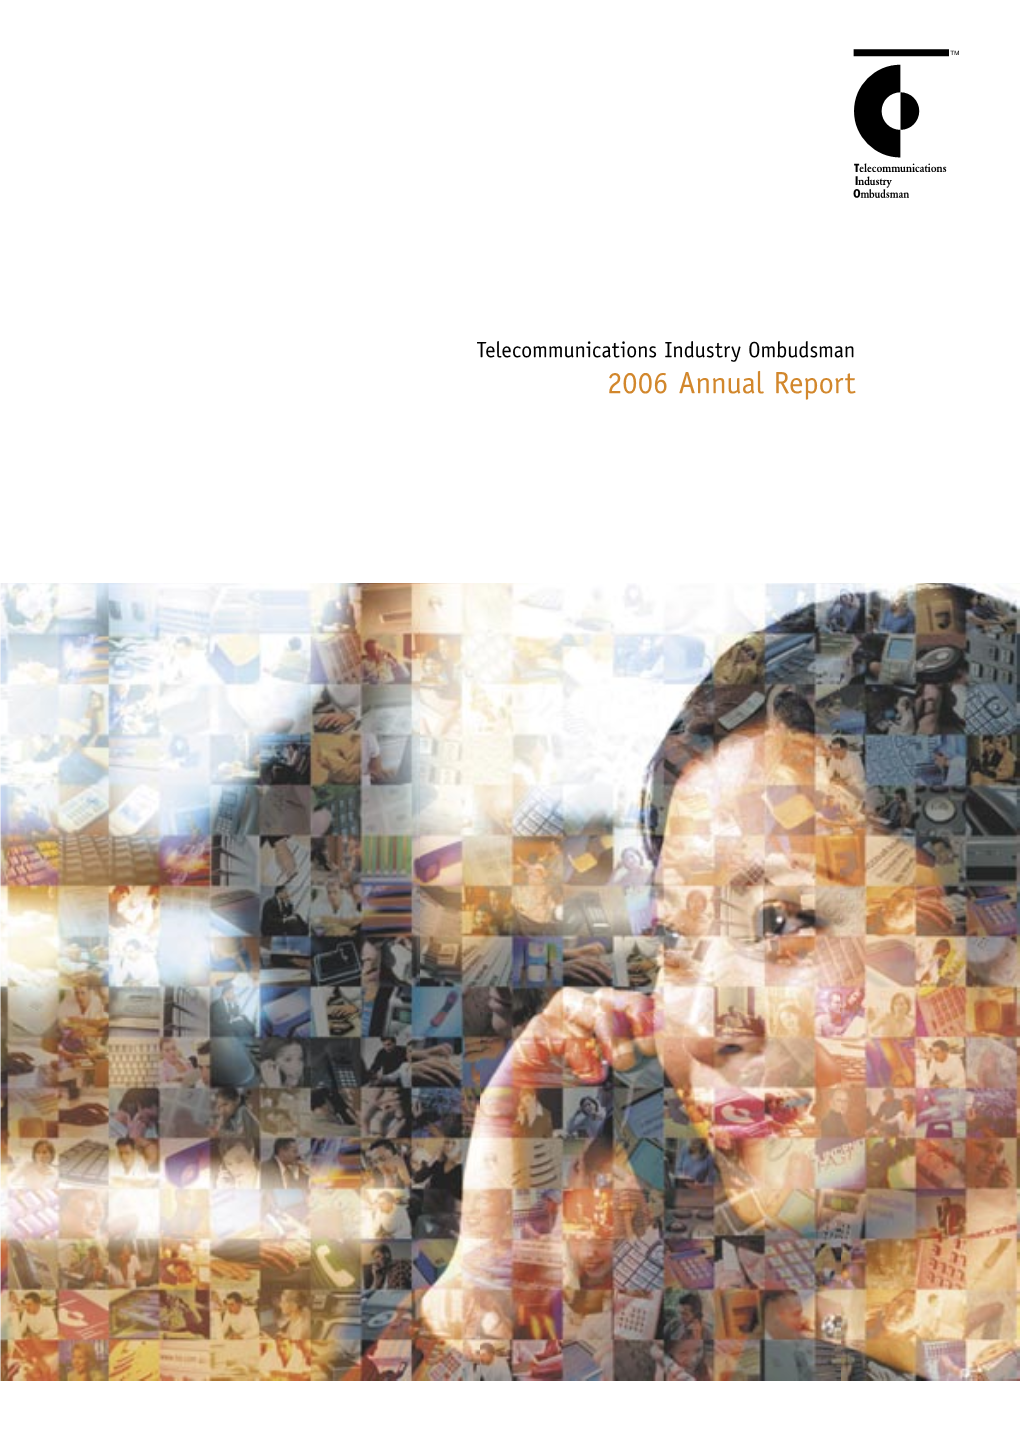 Annual Report 2006